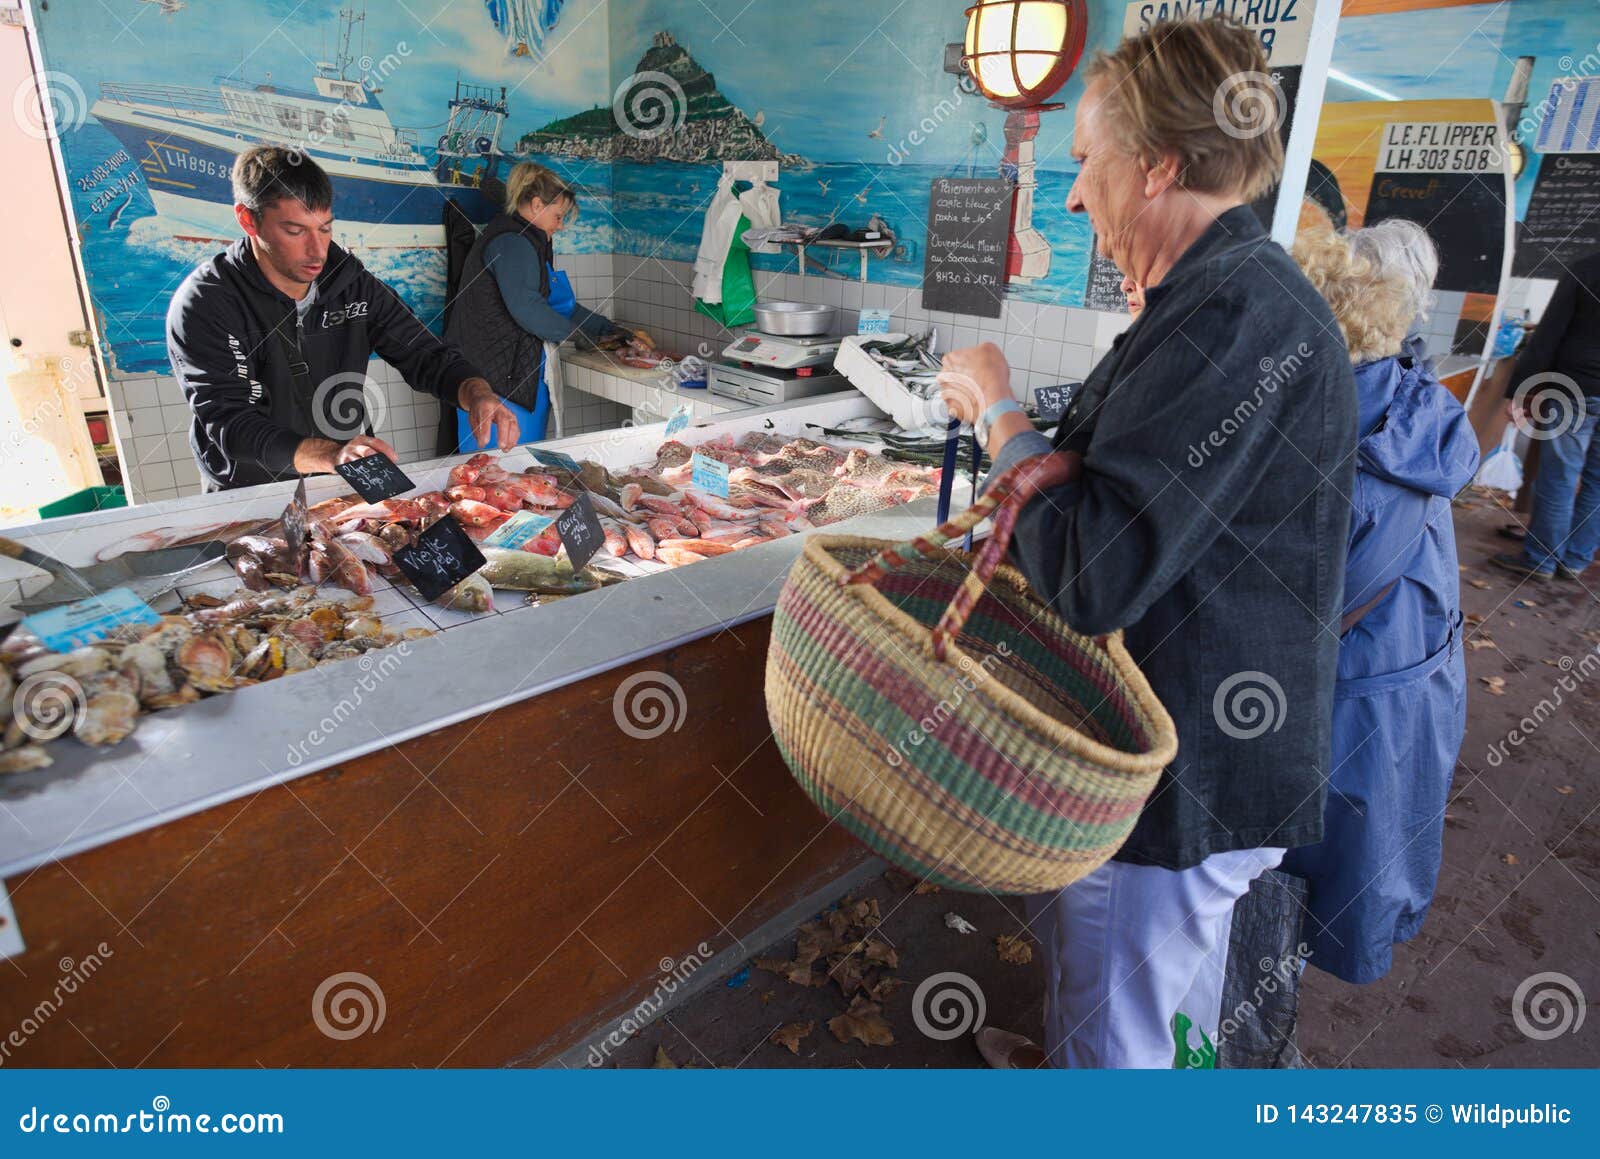 Fresh Fish Open Market Near Harbor Editorial Image - Image ...